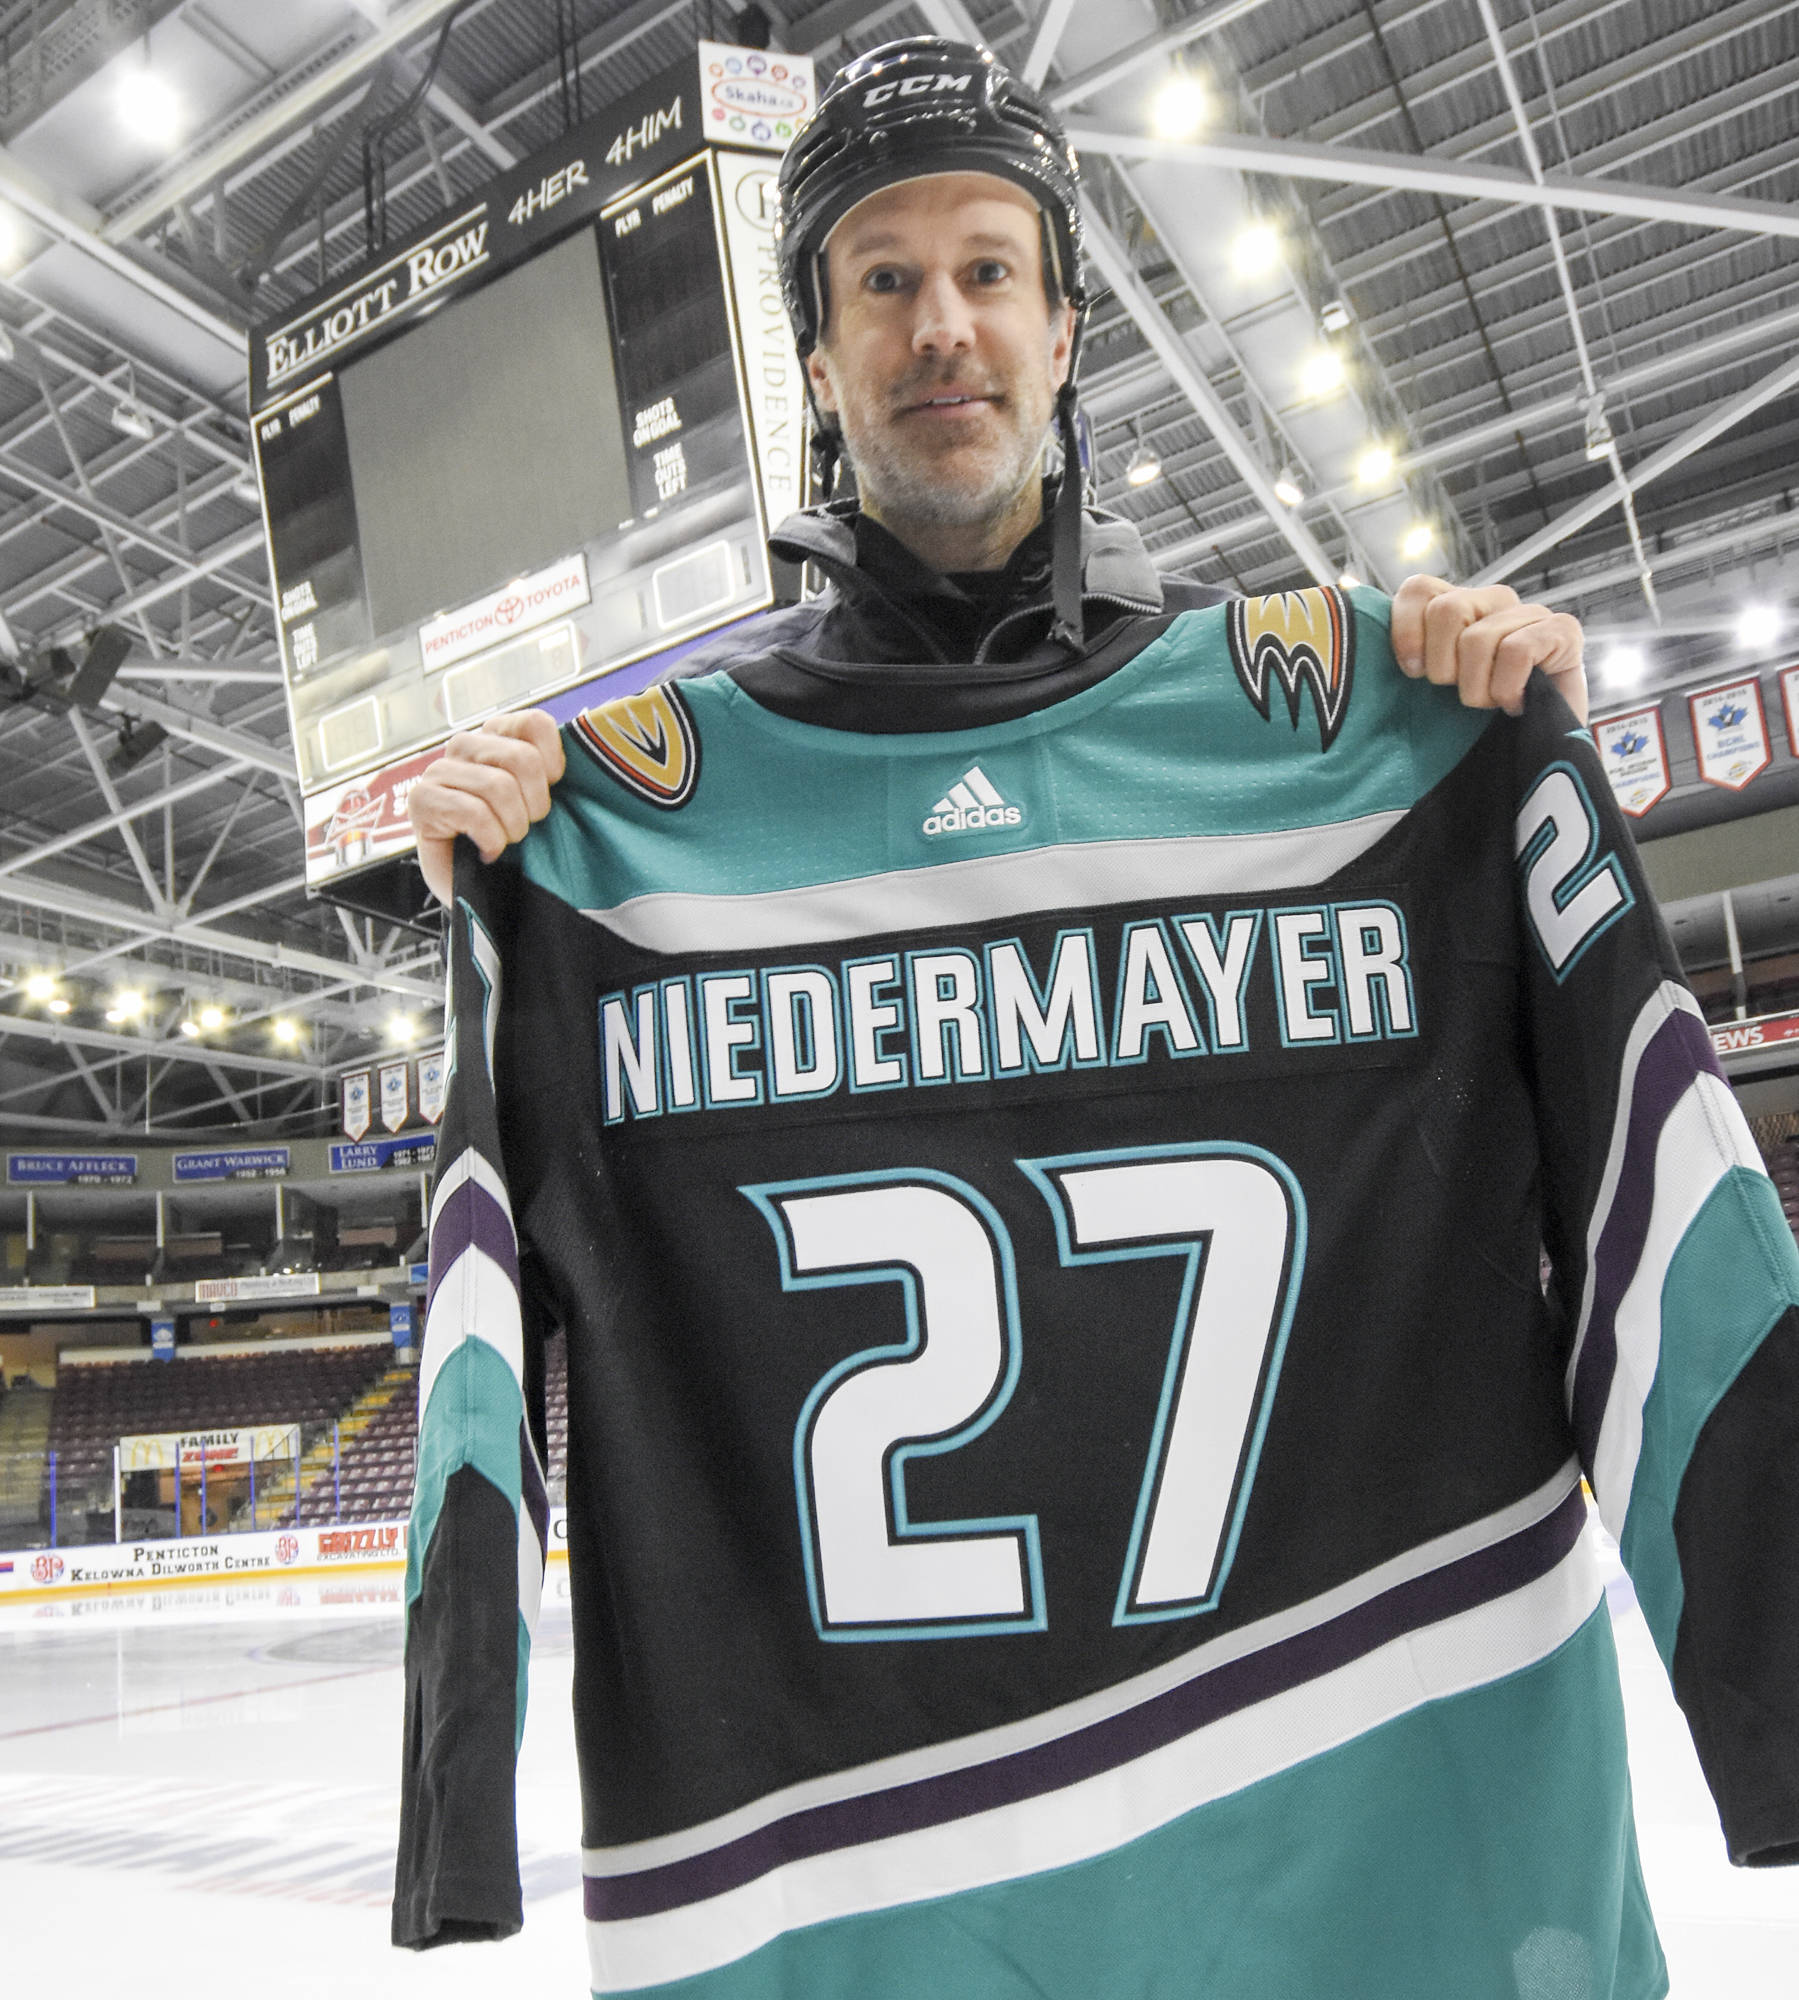 Scott Niedermayer: A Deserving Candidate for a Ducks Number Retirement